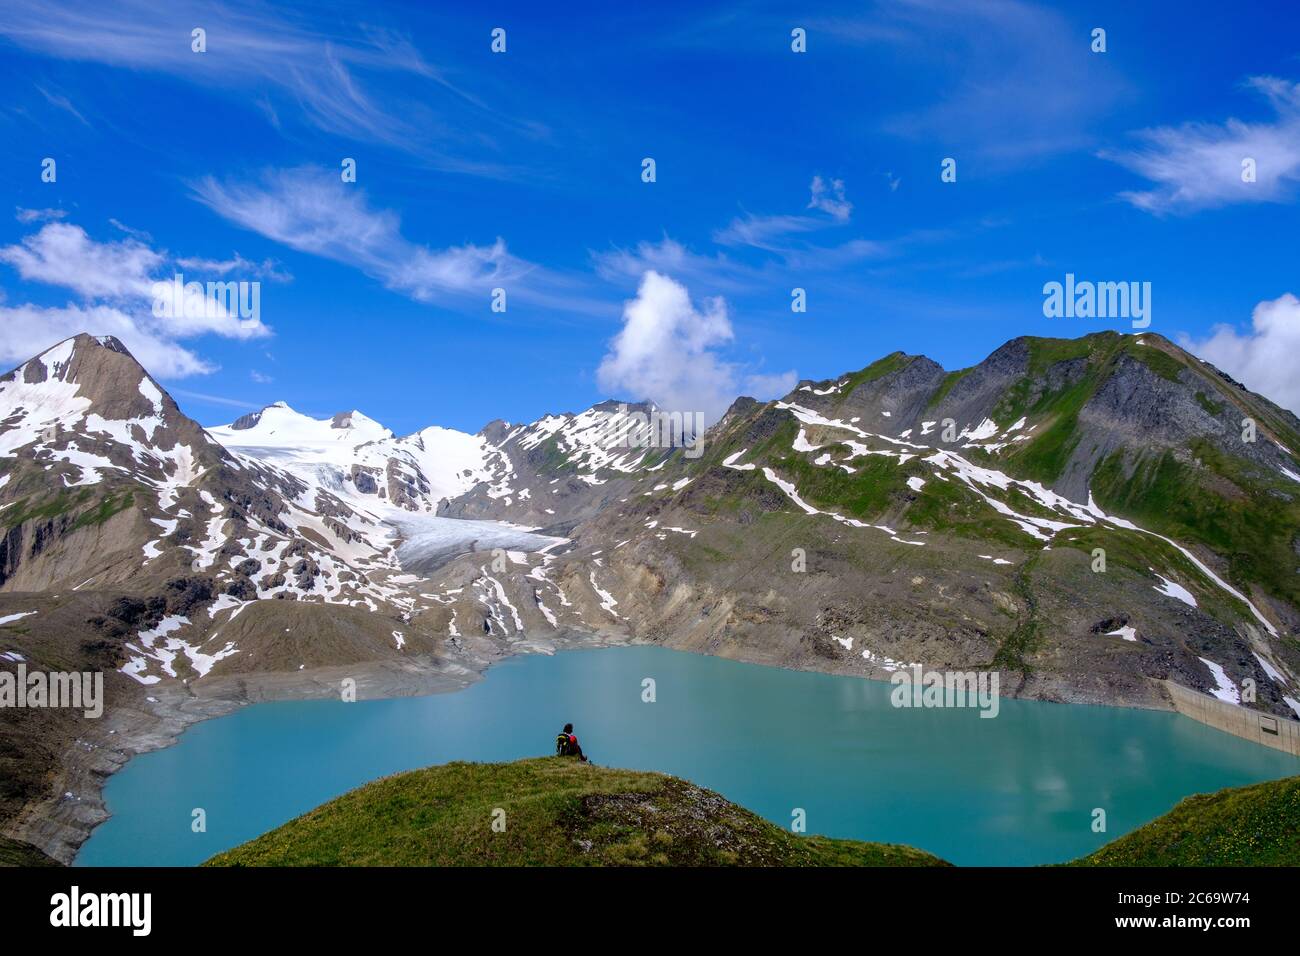 Looking lakes and mountains, Griespass (Cornopass), Switzerland Stock Photo